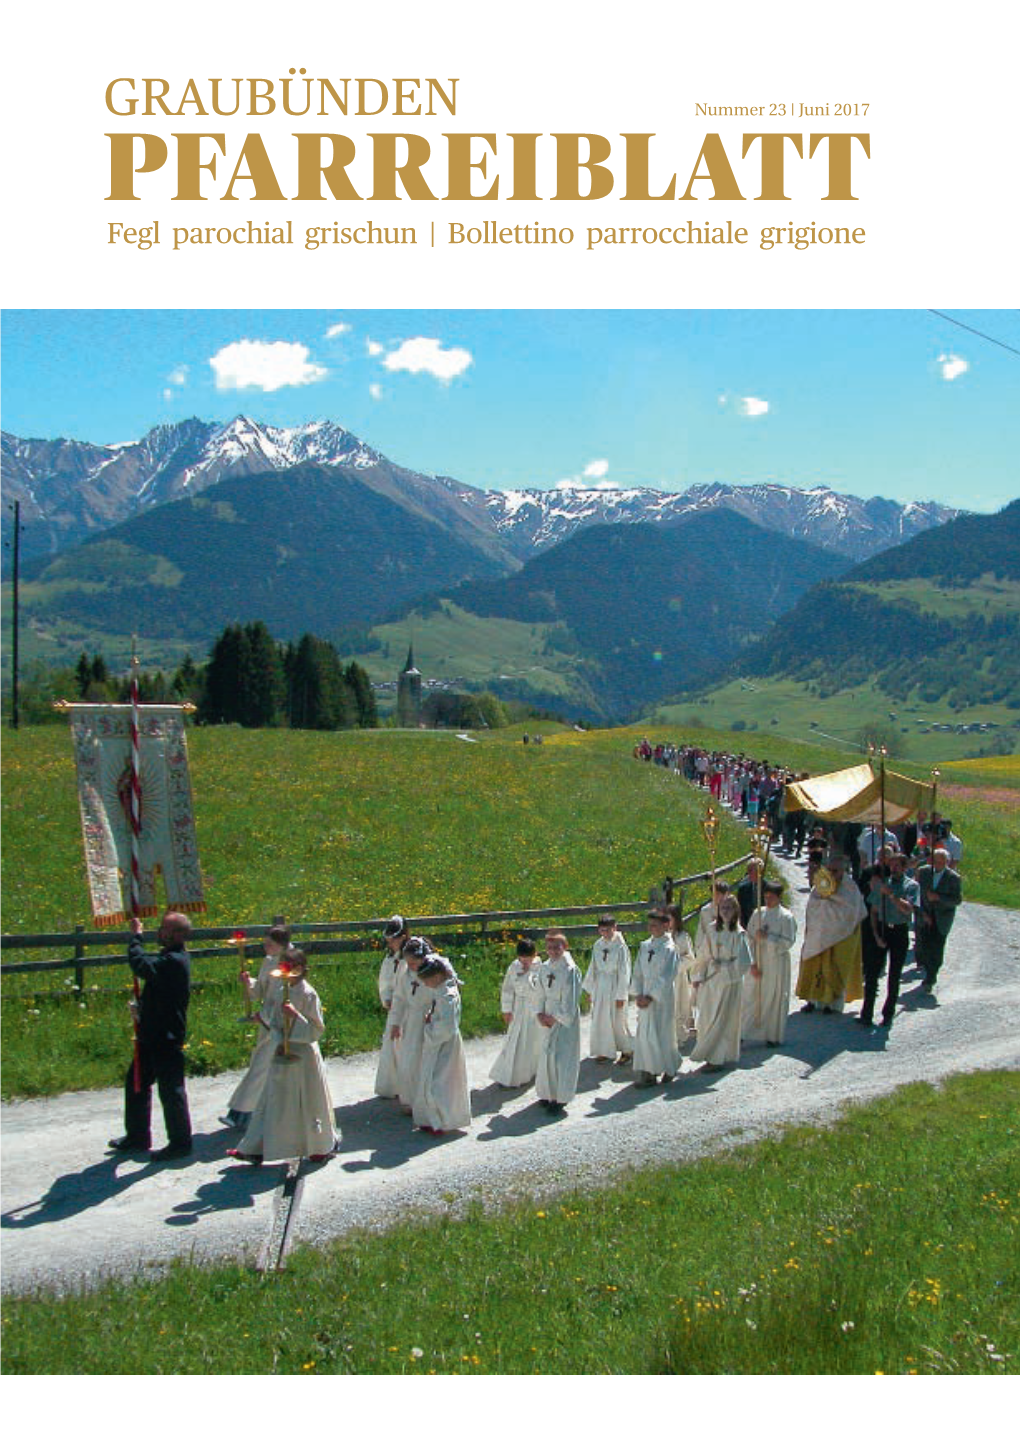 Juni 2017 Pfarreiblatt Fegl Parochial Grischun | Bollettino Parrocchiale Grigione 2 Pfarreiblatt Graubünden | Juni 2017